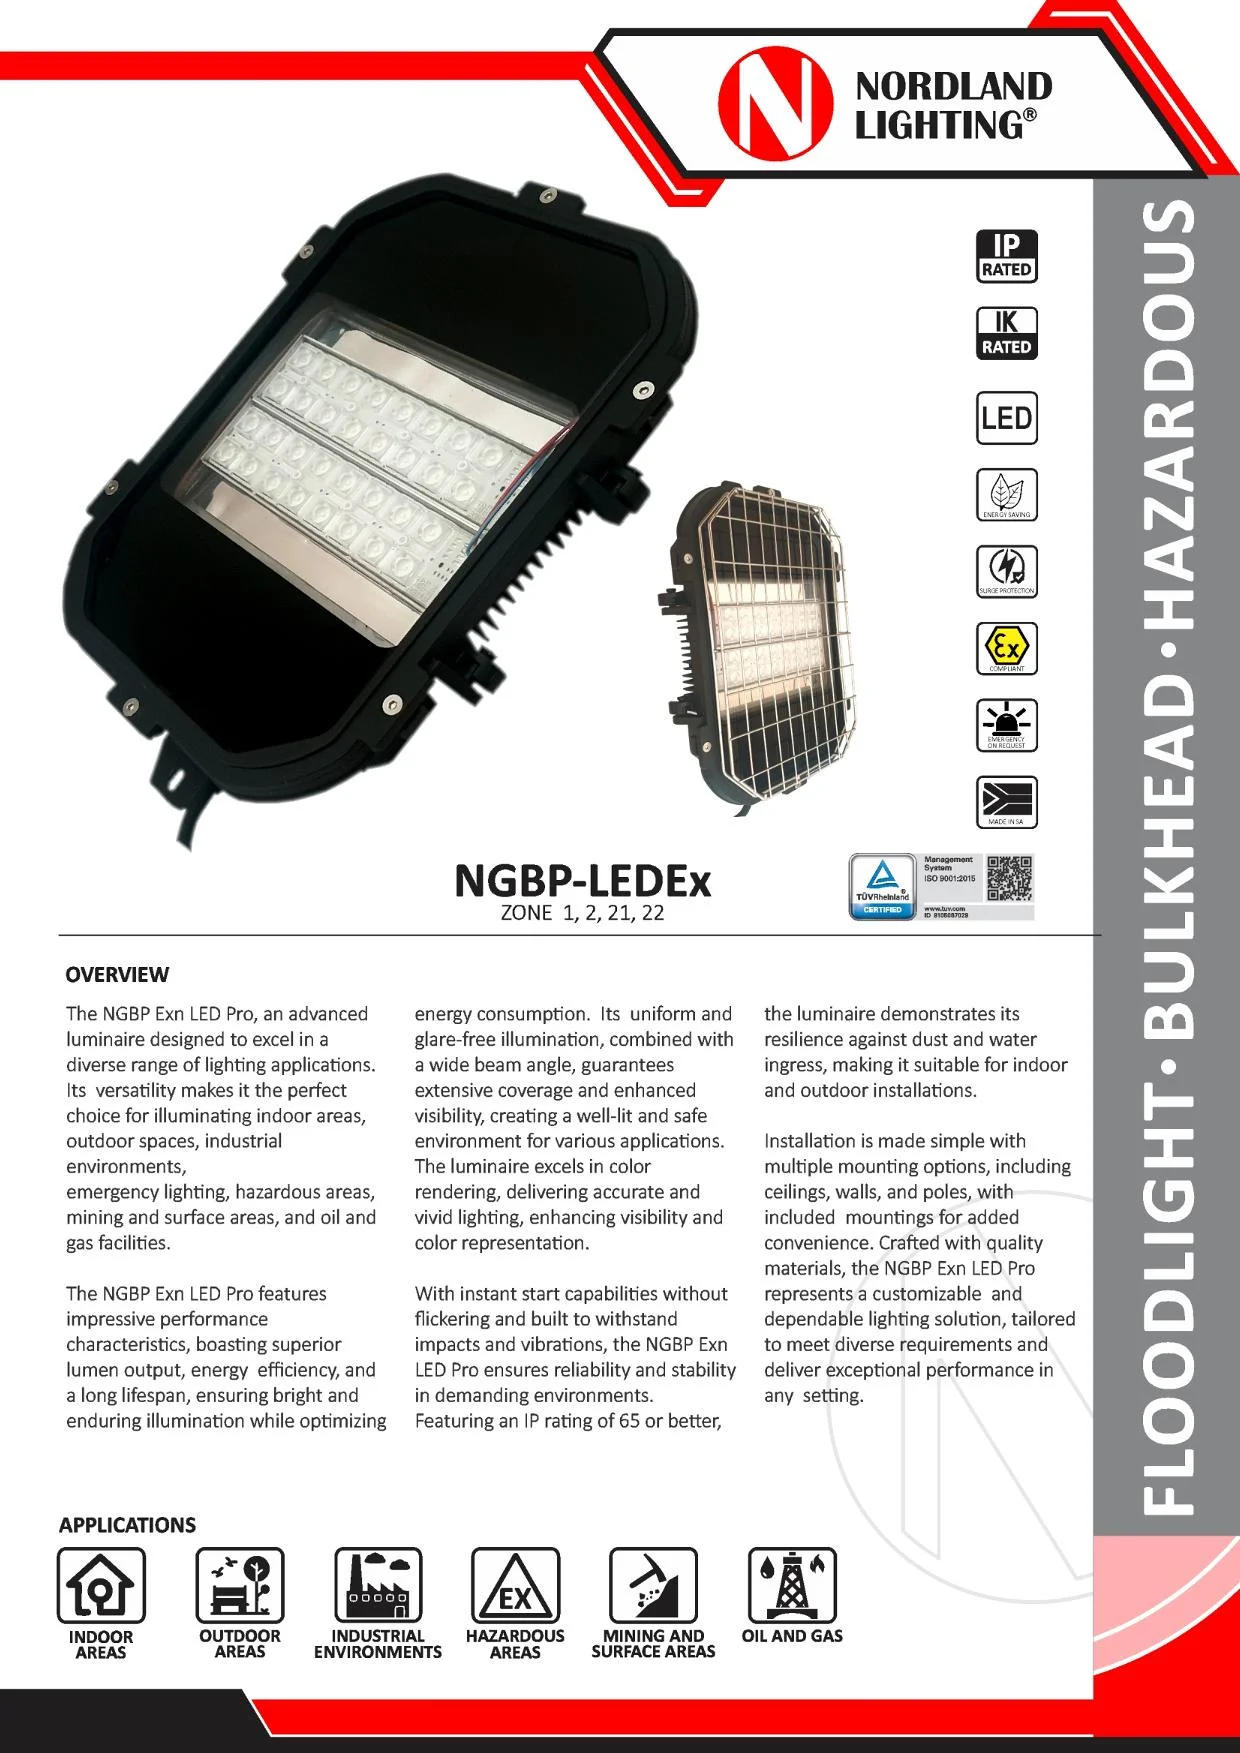 NL13 Nordland NGBP-LEDEx Advanced Luminaire